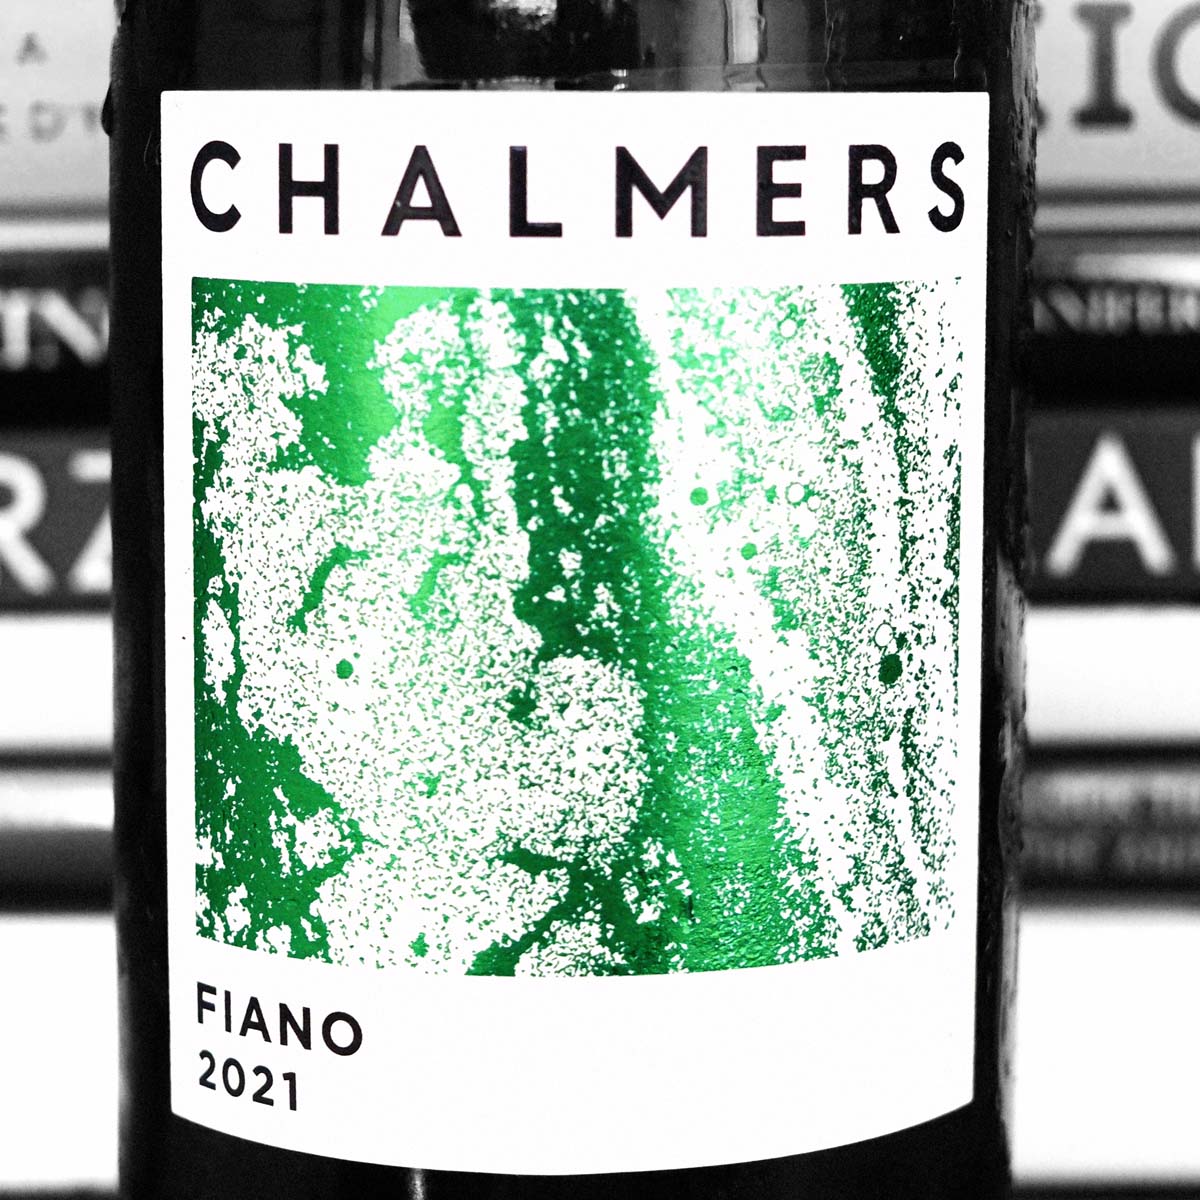 Chalmers Fiano 2021 Heathcote, Vic